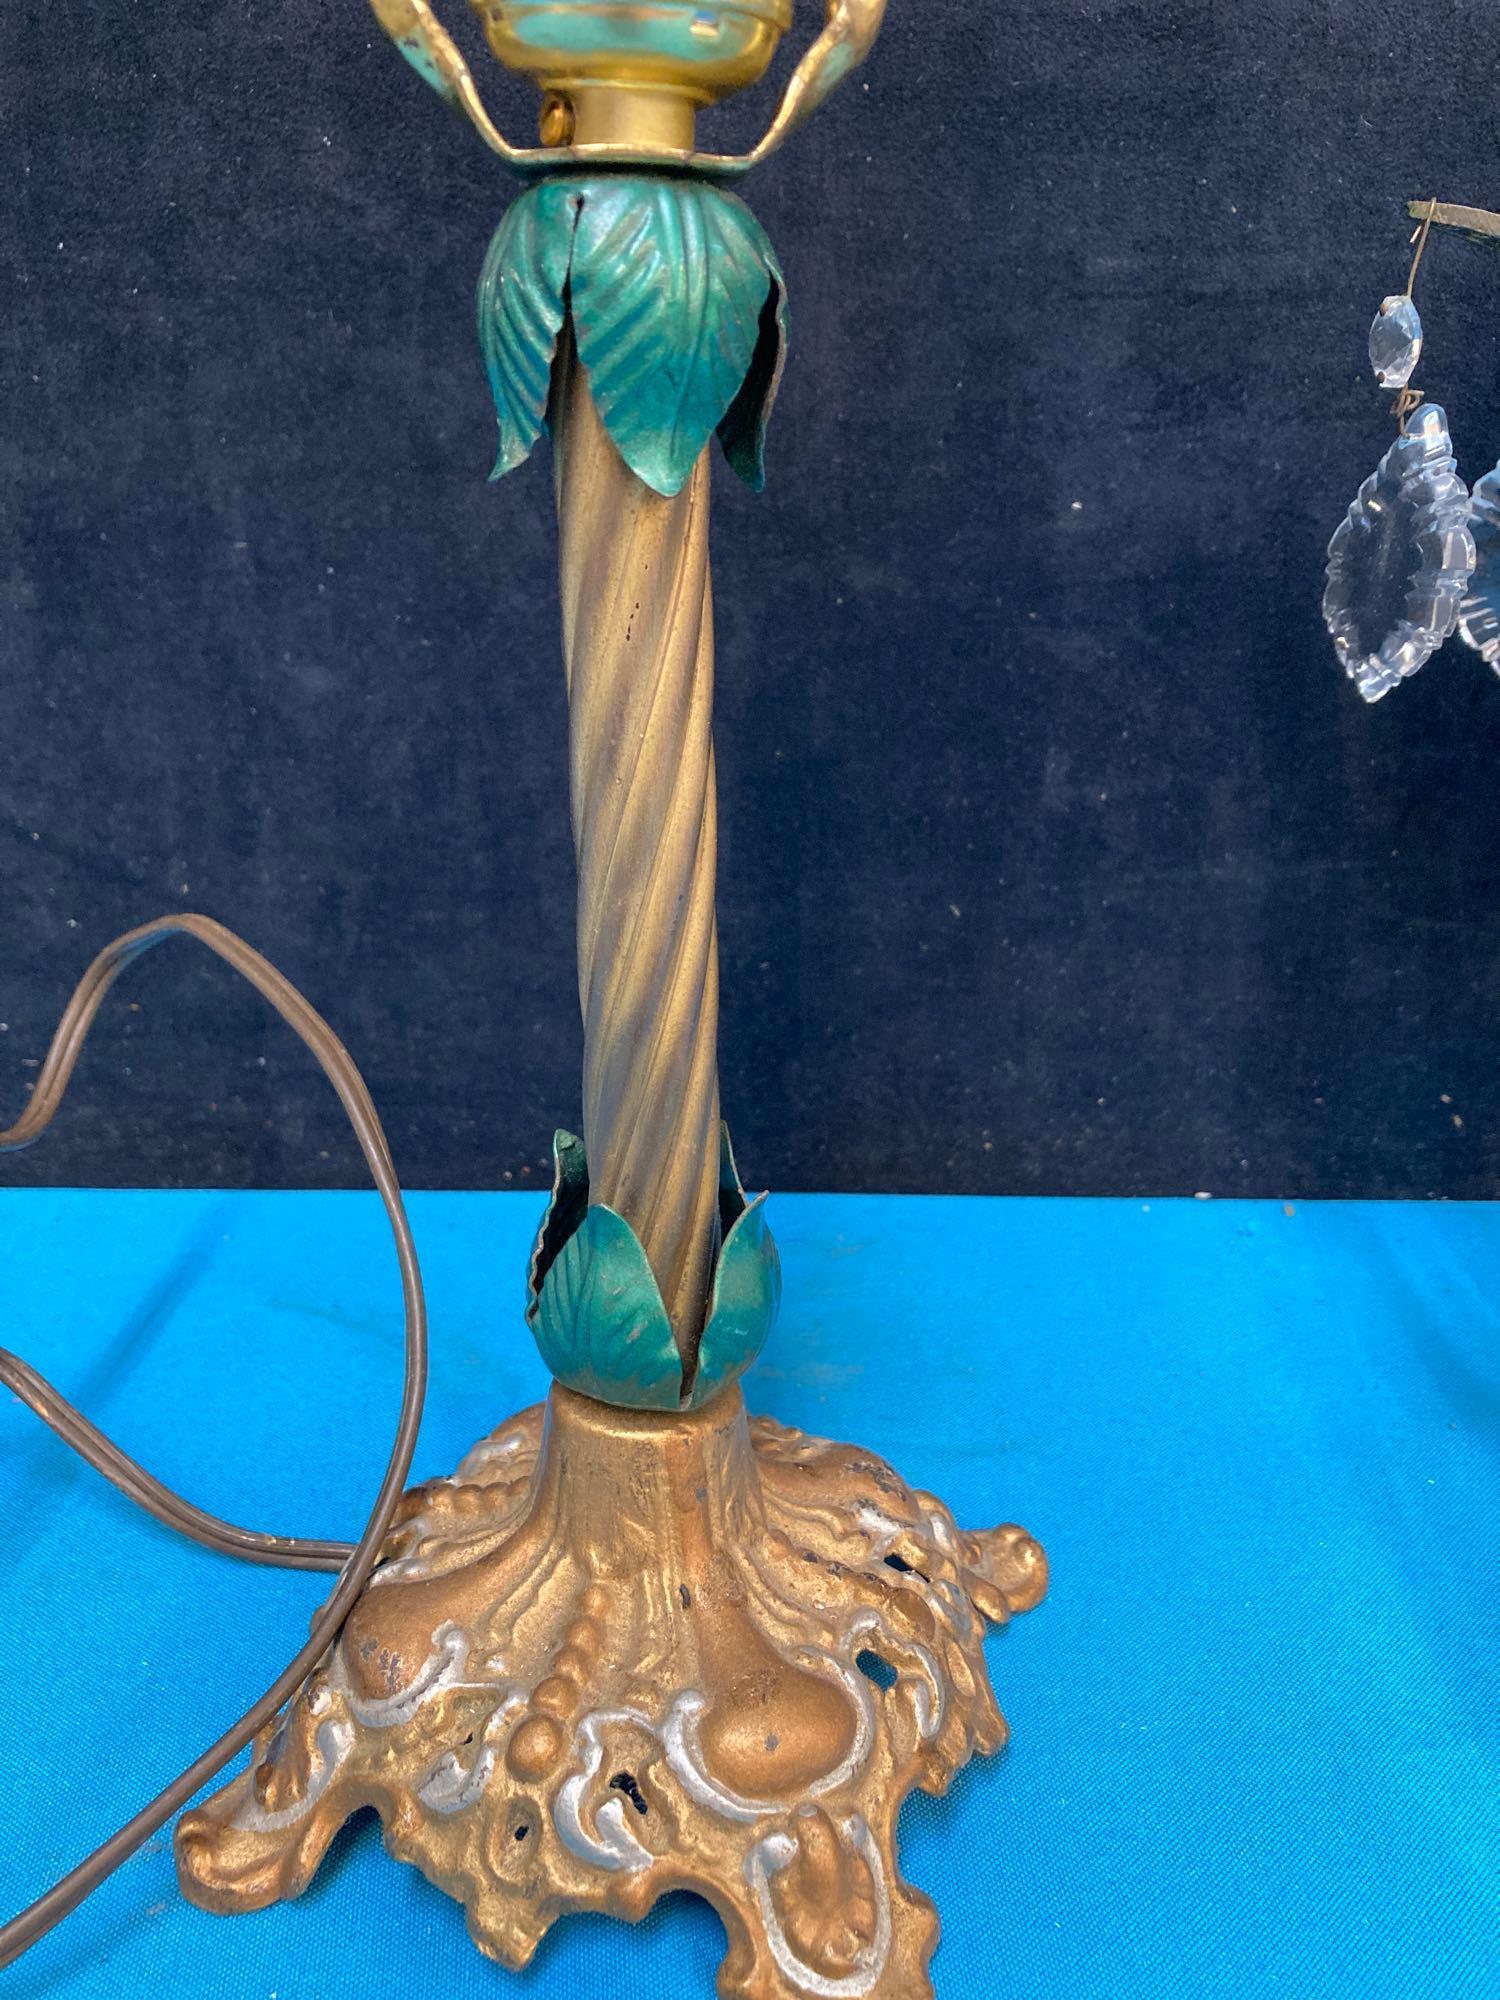 Gorgeous candelabra lamp, and metal base lamp